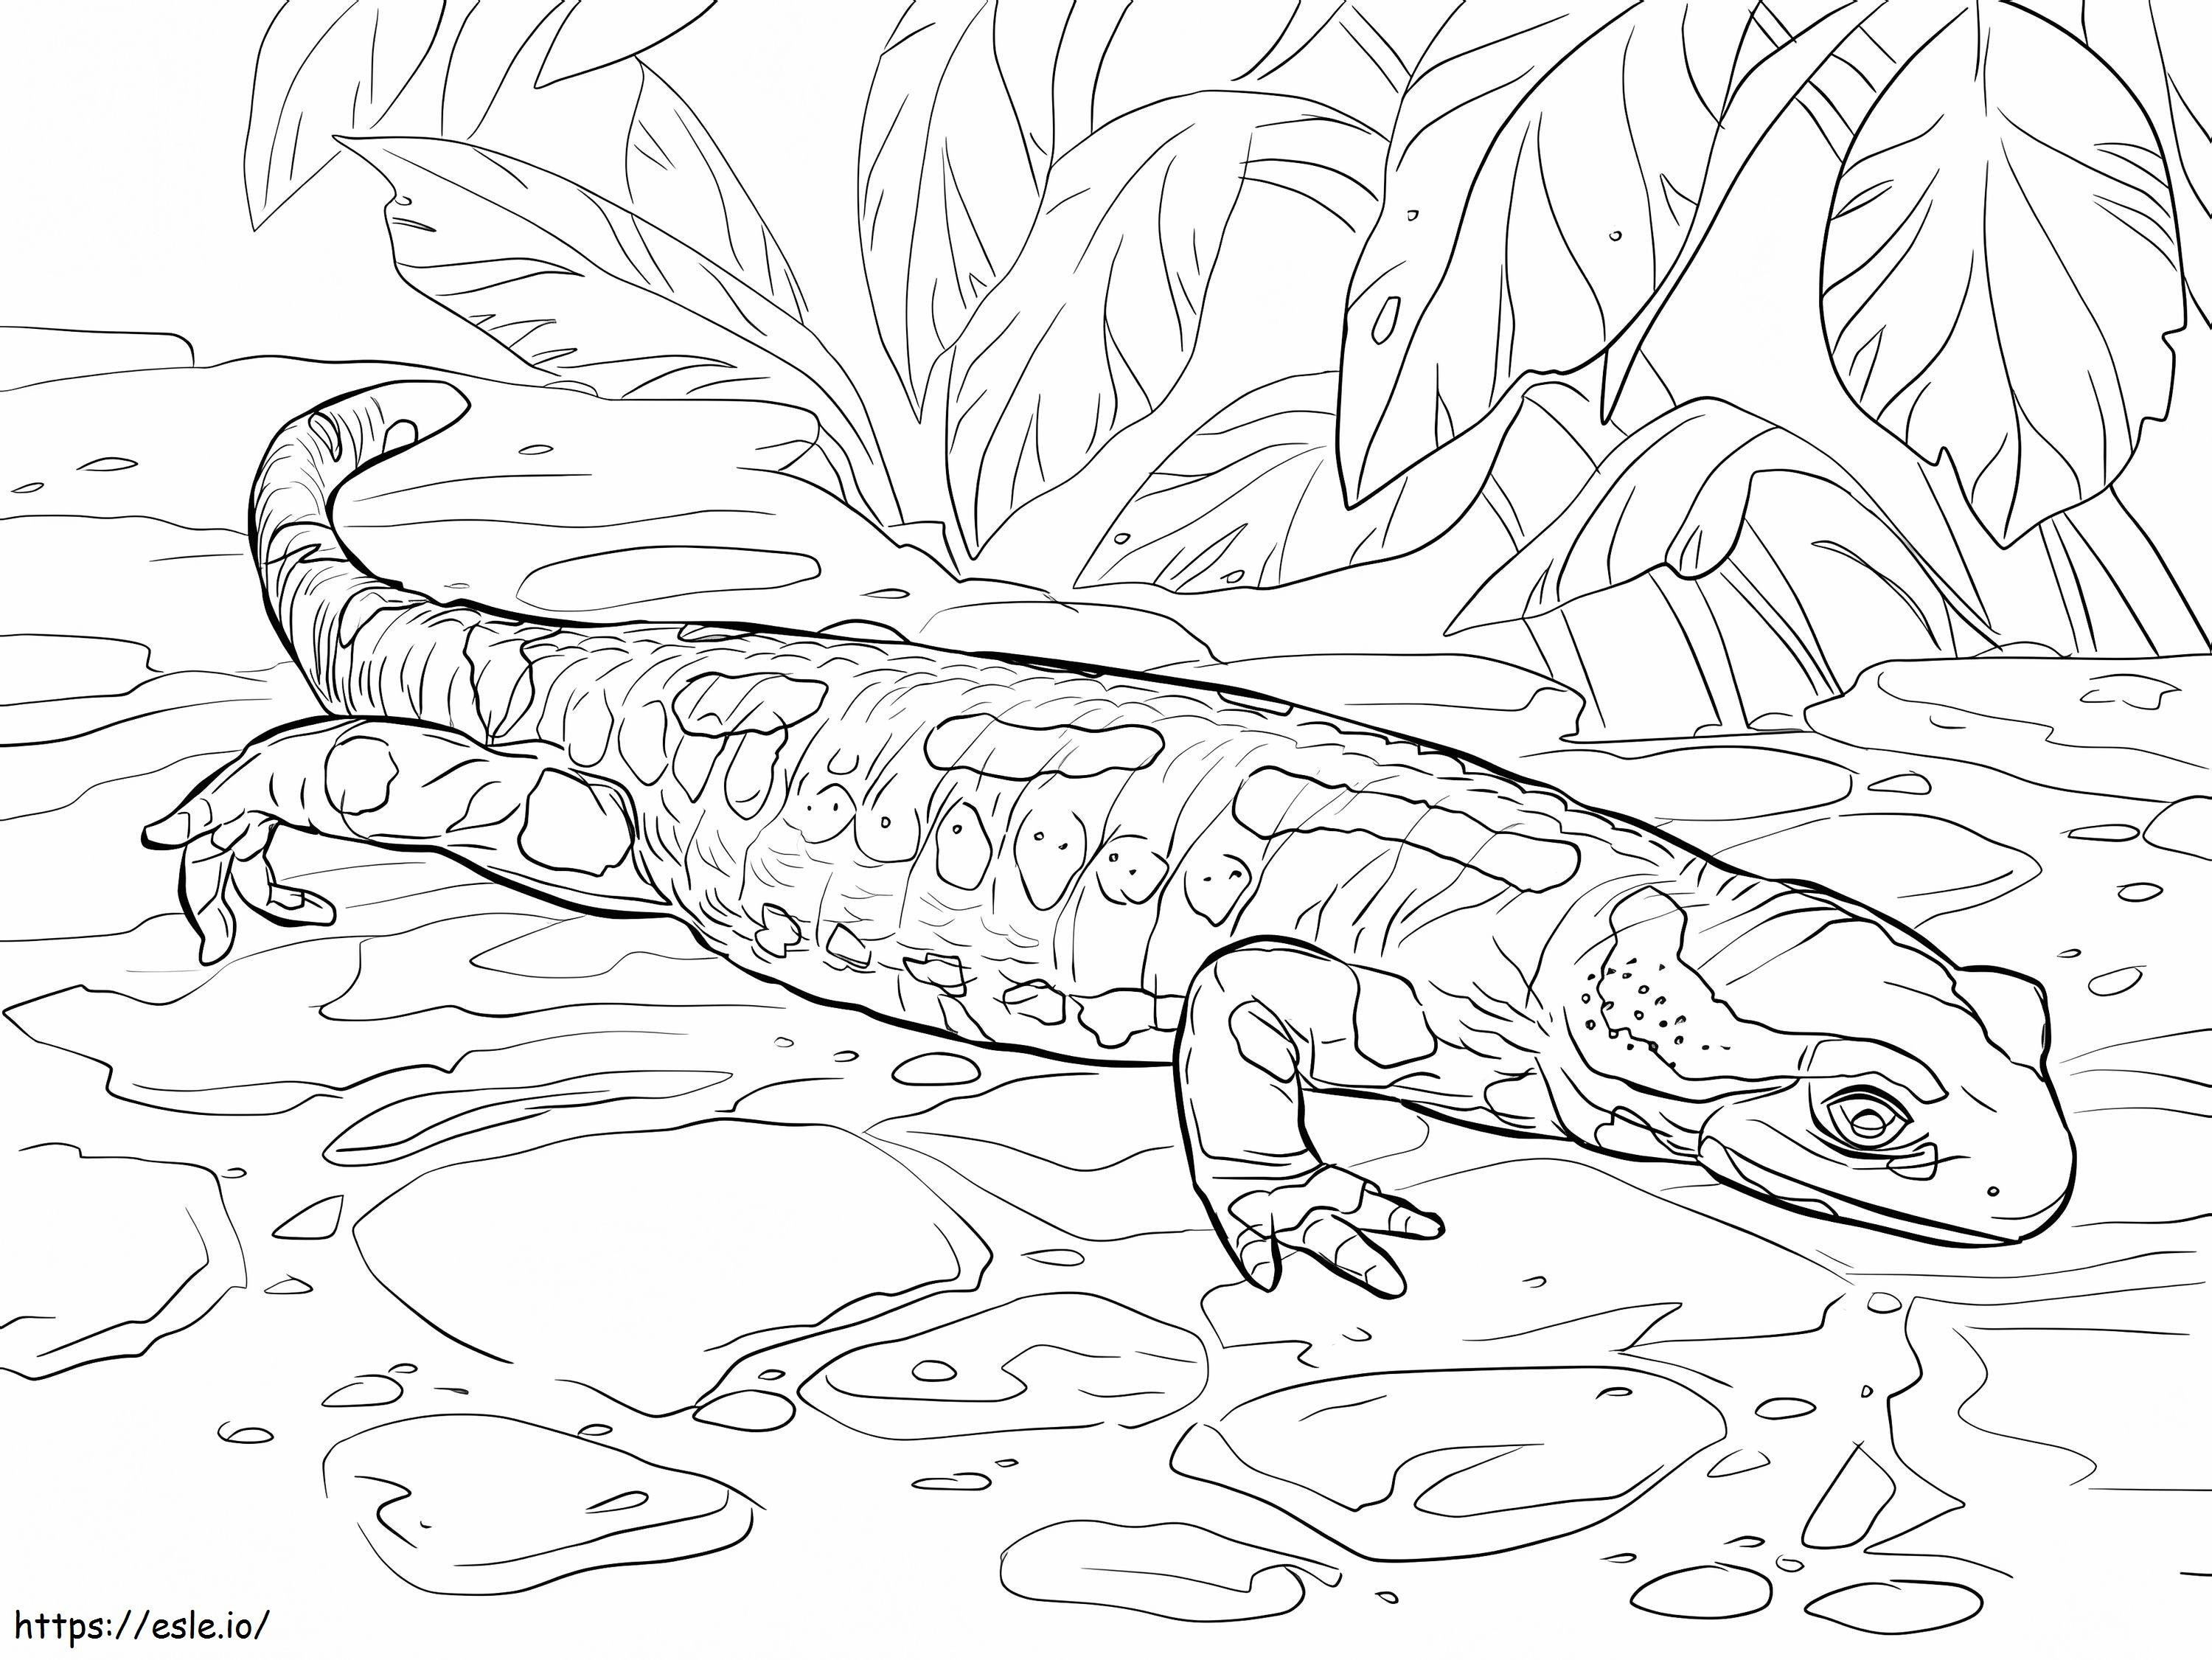 Fire Salamander coloring page